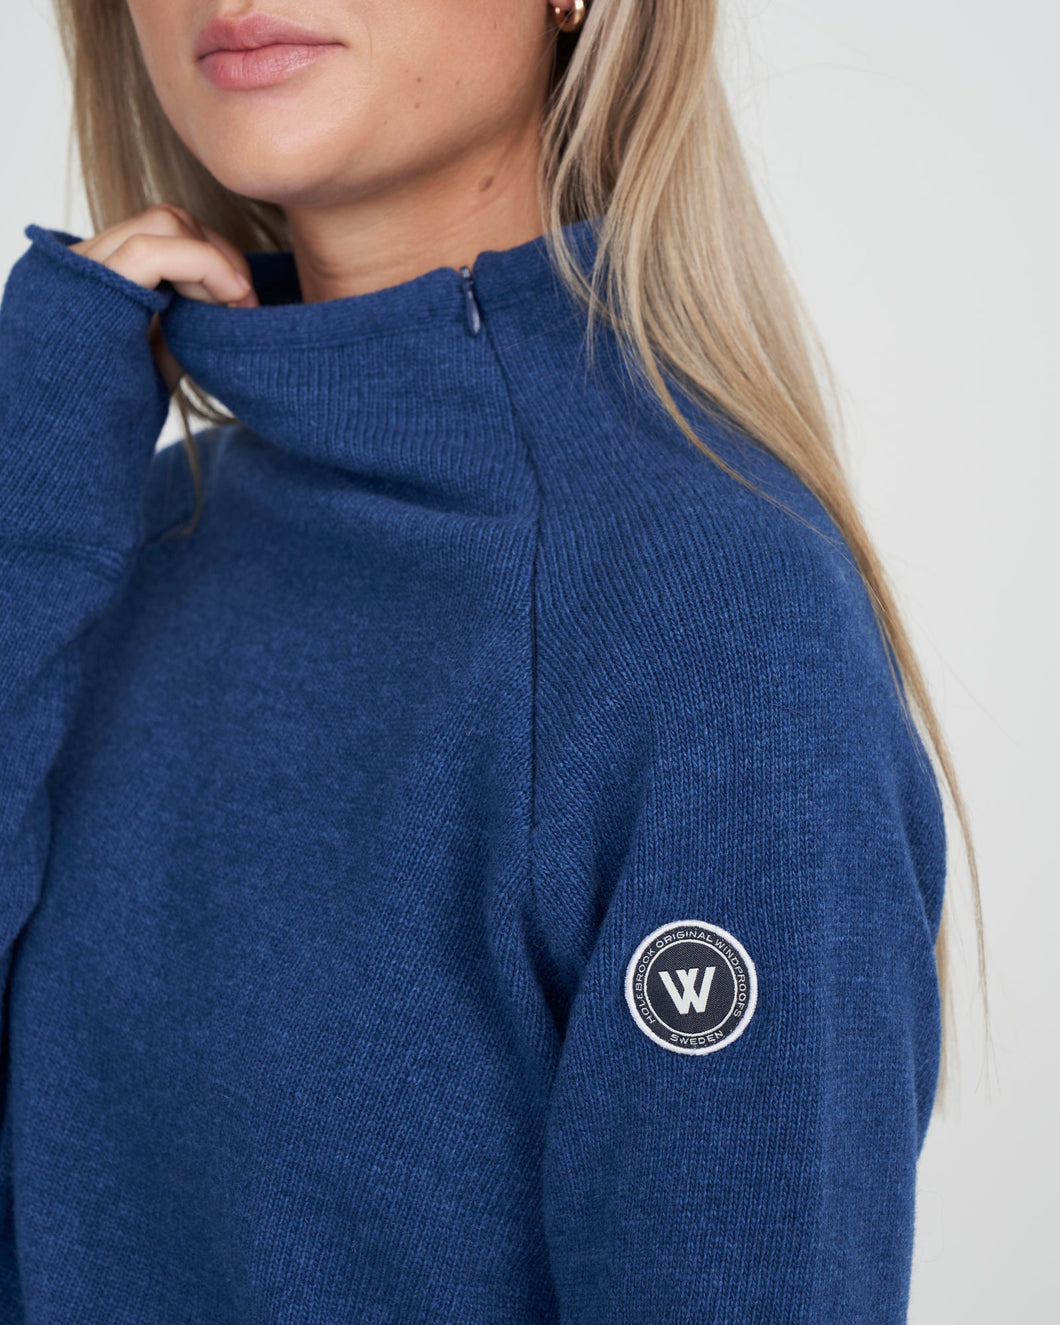 Holebrook Sweden Martina Windproof Sweater dark royal blue zip